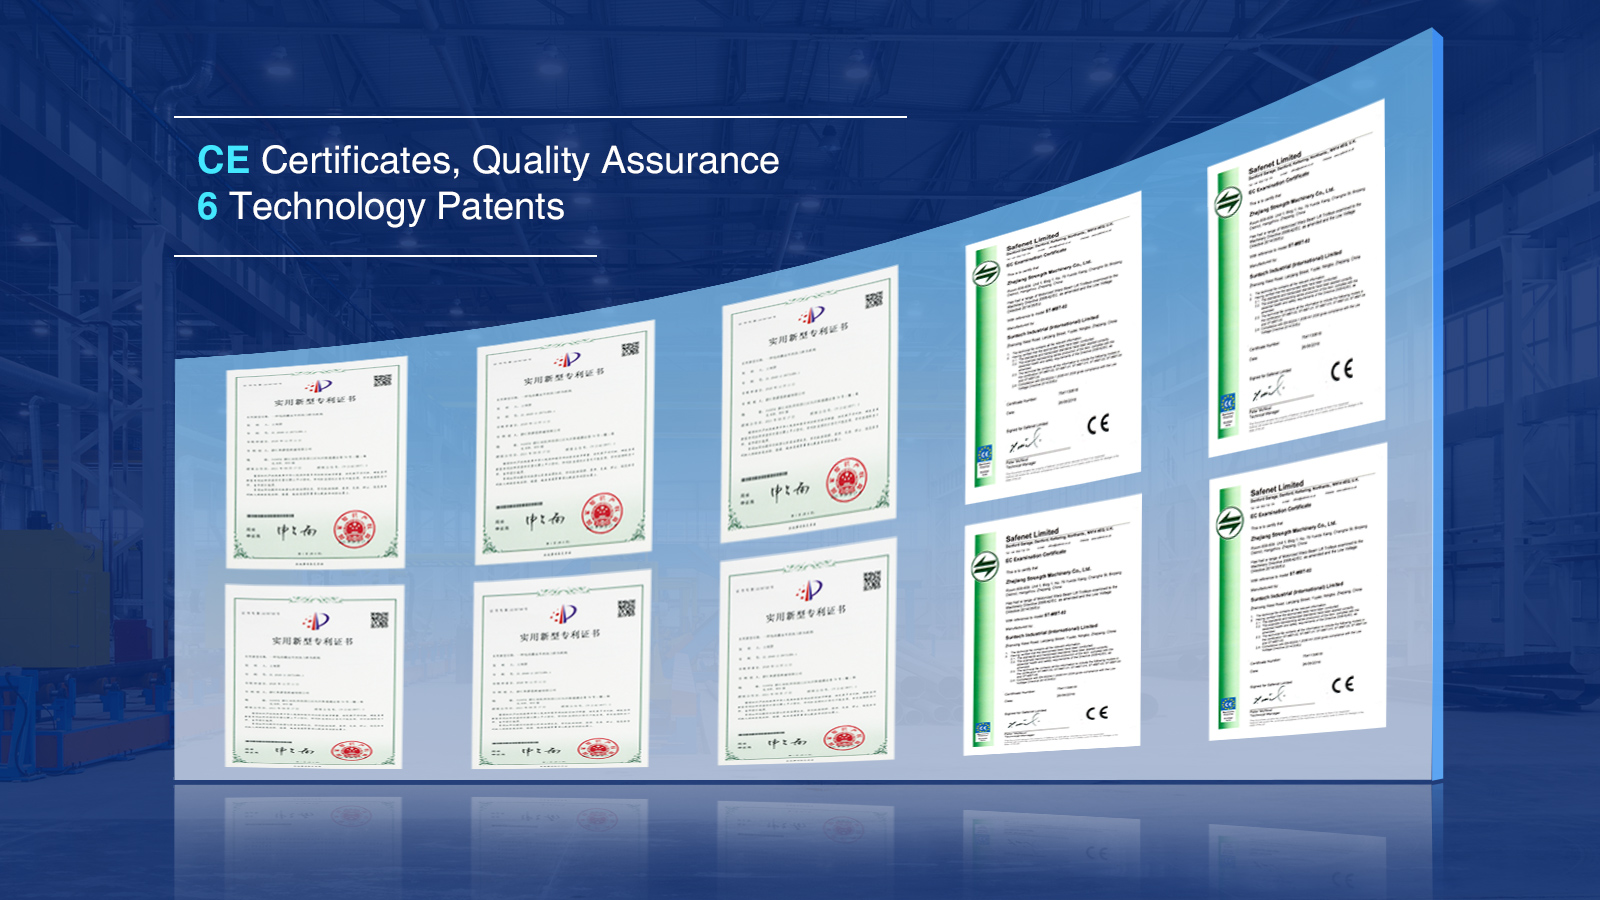 CE Certificates, Quality Assurance Technology Patents